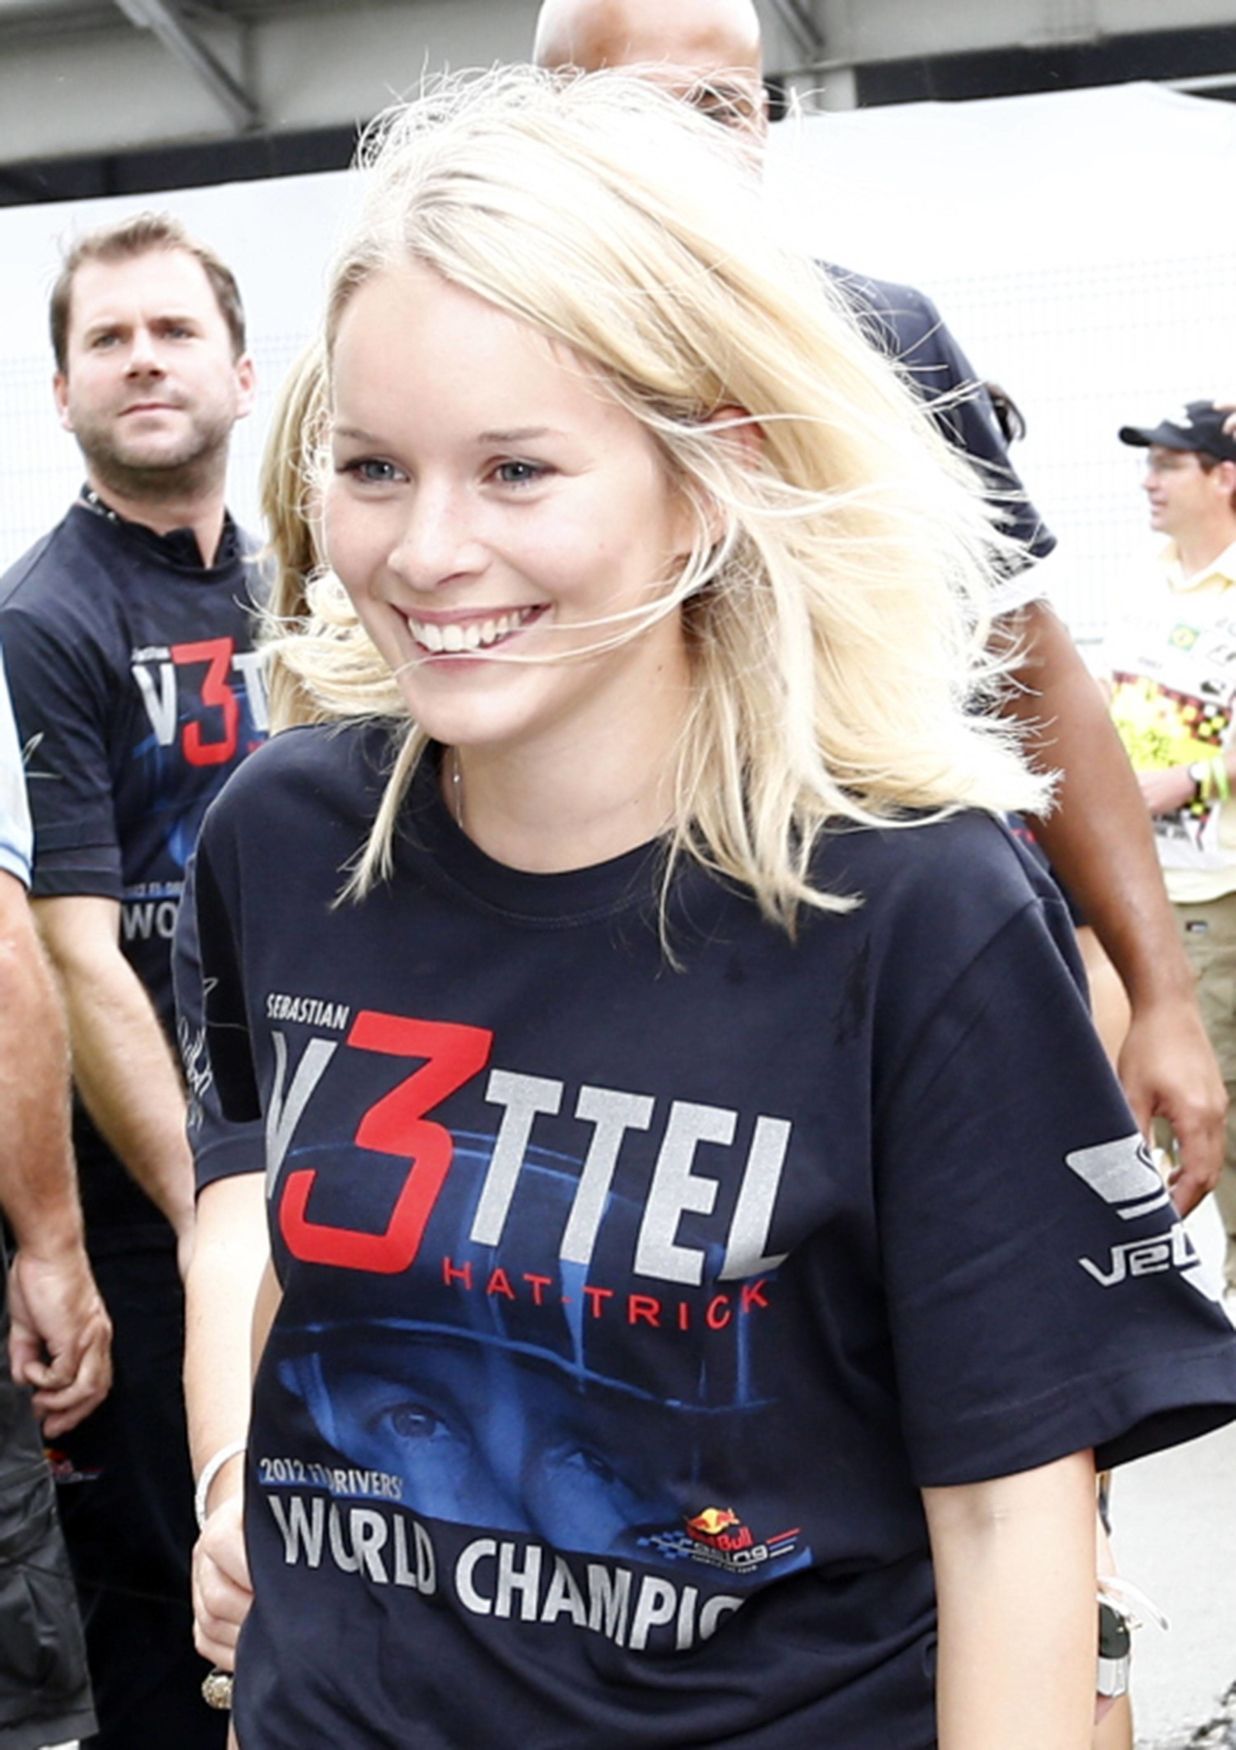 Hanna Spraterová, partnerka Sebastiana Vettela (2012)